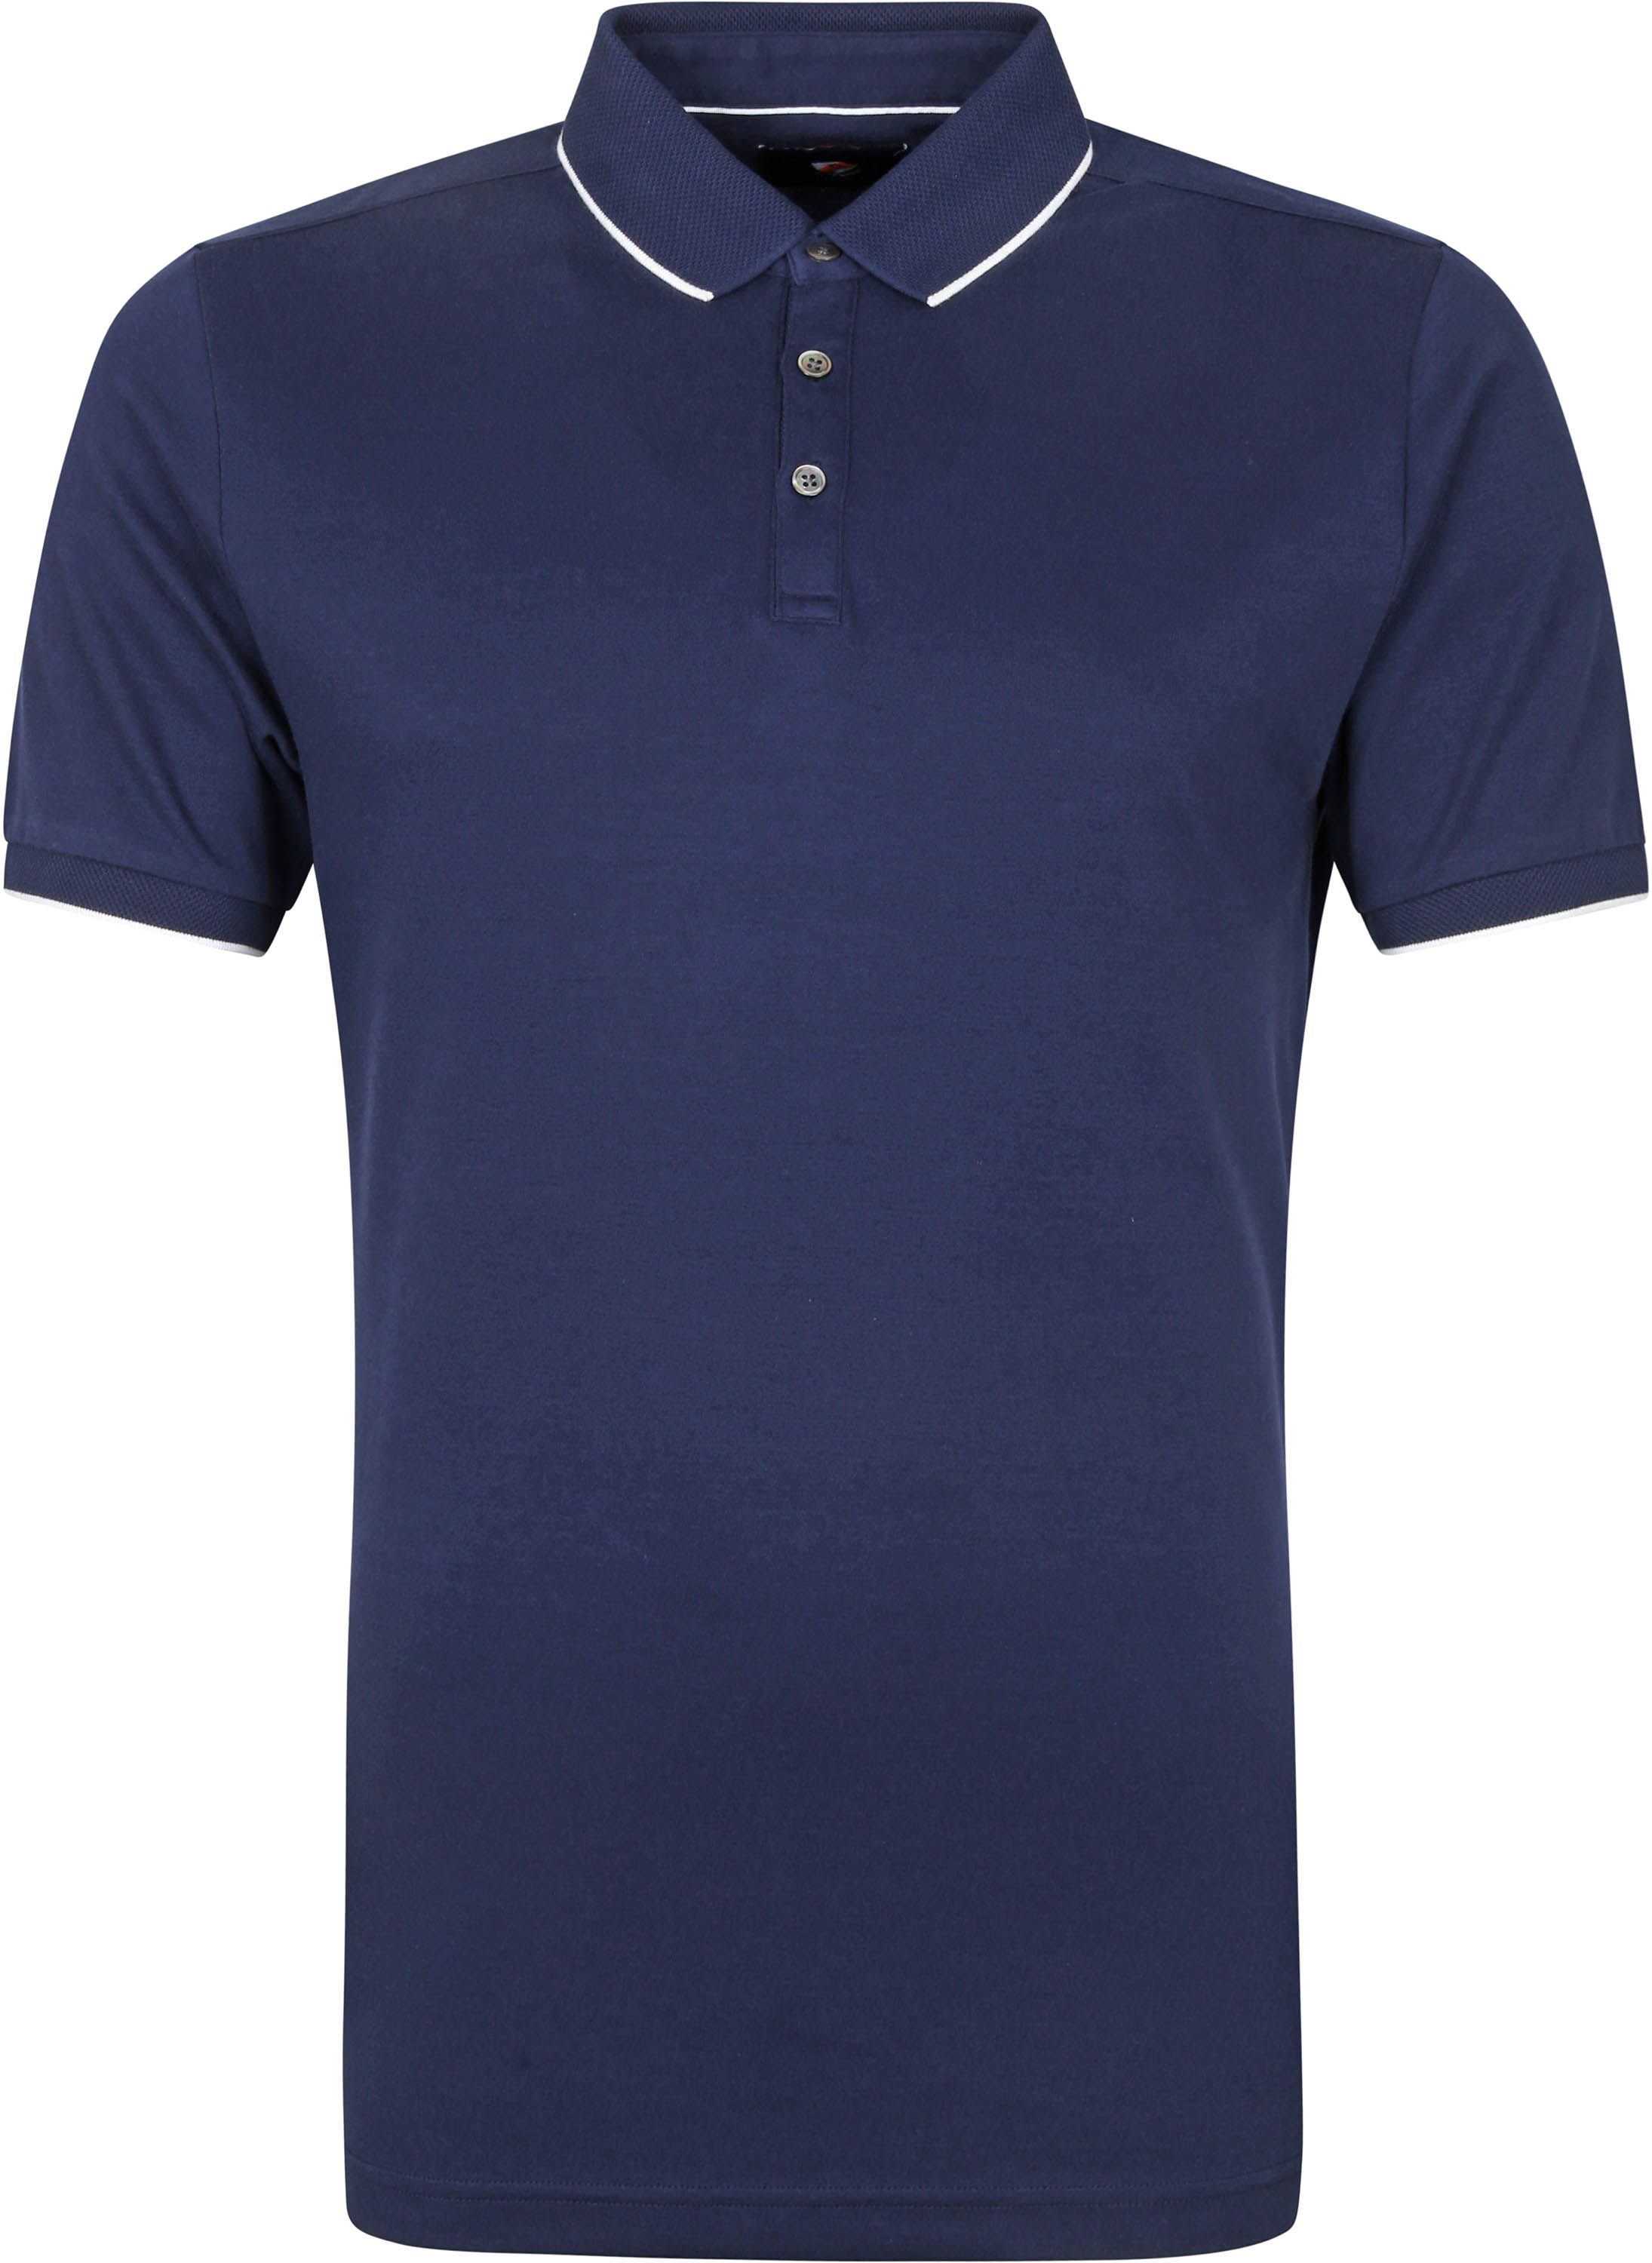 Suitable Polo Shirt Liquid Navy Dark Blue Blue size L